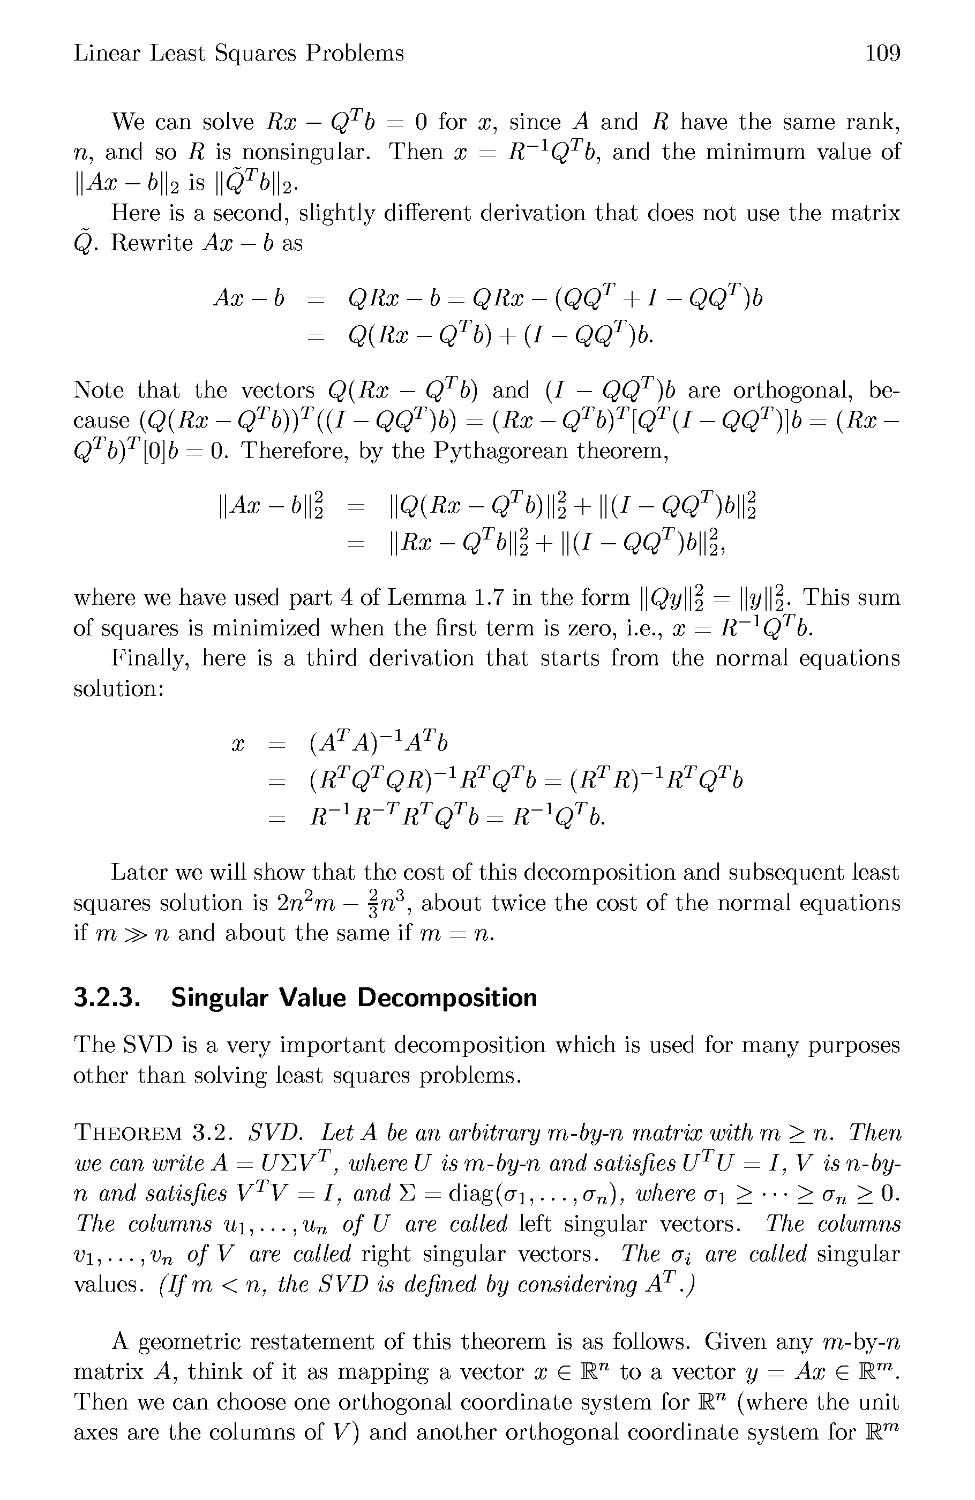 3.2.3 Singular Value Decomposition